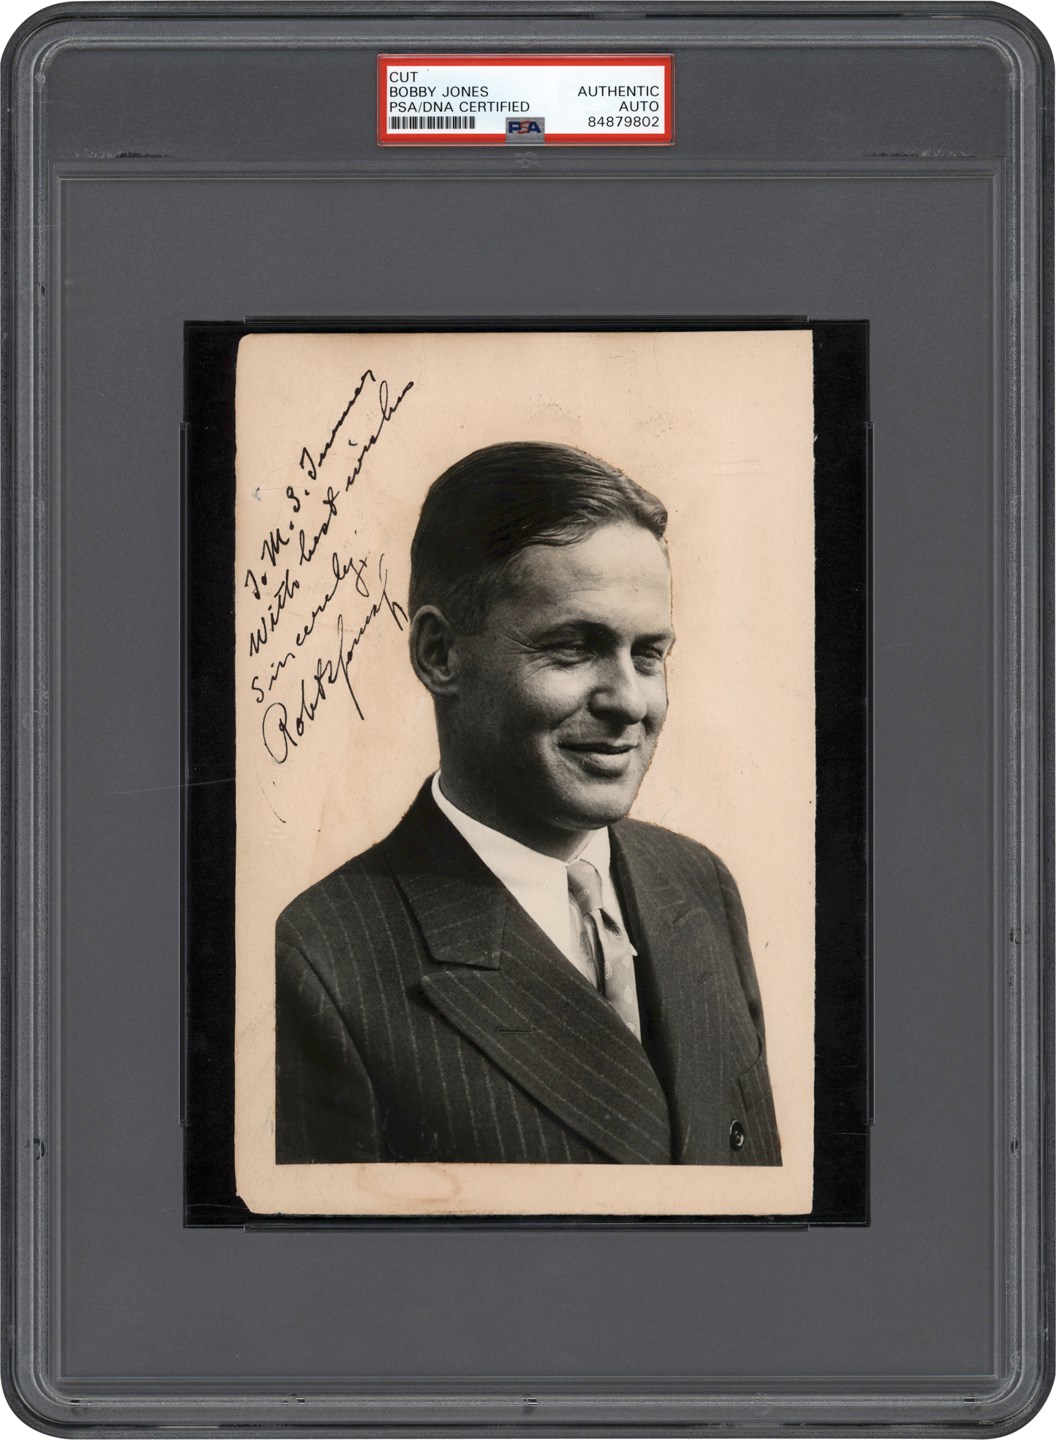 Olympics and All Sports - Vintage Bobby Jones Signature w/Photograph (PSA)